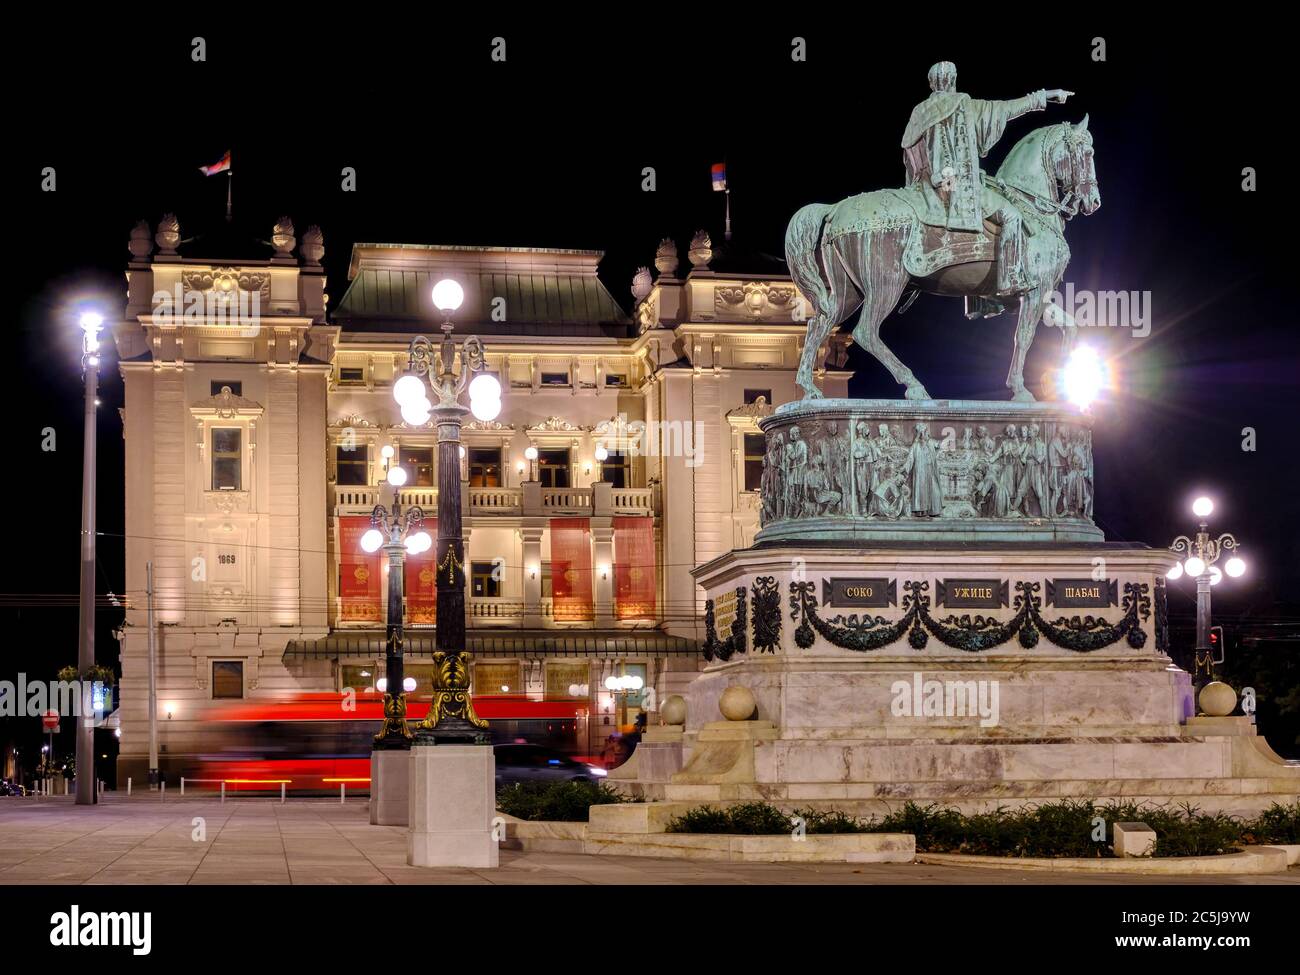 Belgrade / Serbia - November 2, 2019: Statue of Prince Mihailo Obrenovic and the National Theater of Serbia in the Republic Square in Belgrade, Serbia Stock Photo